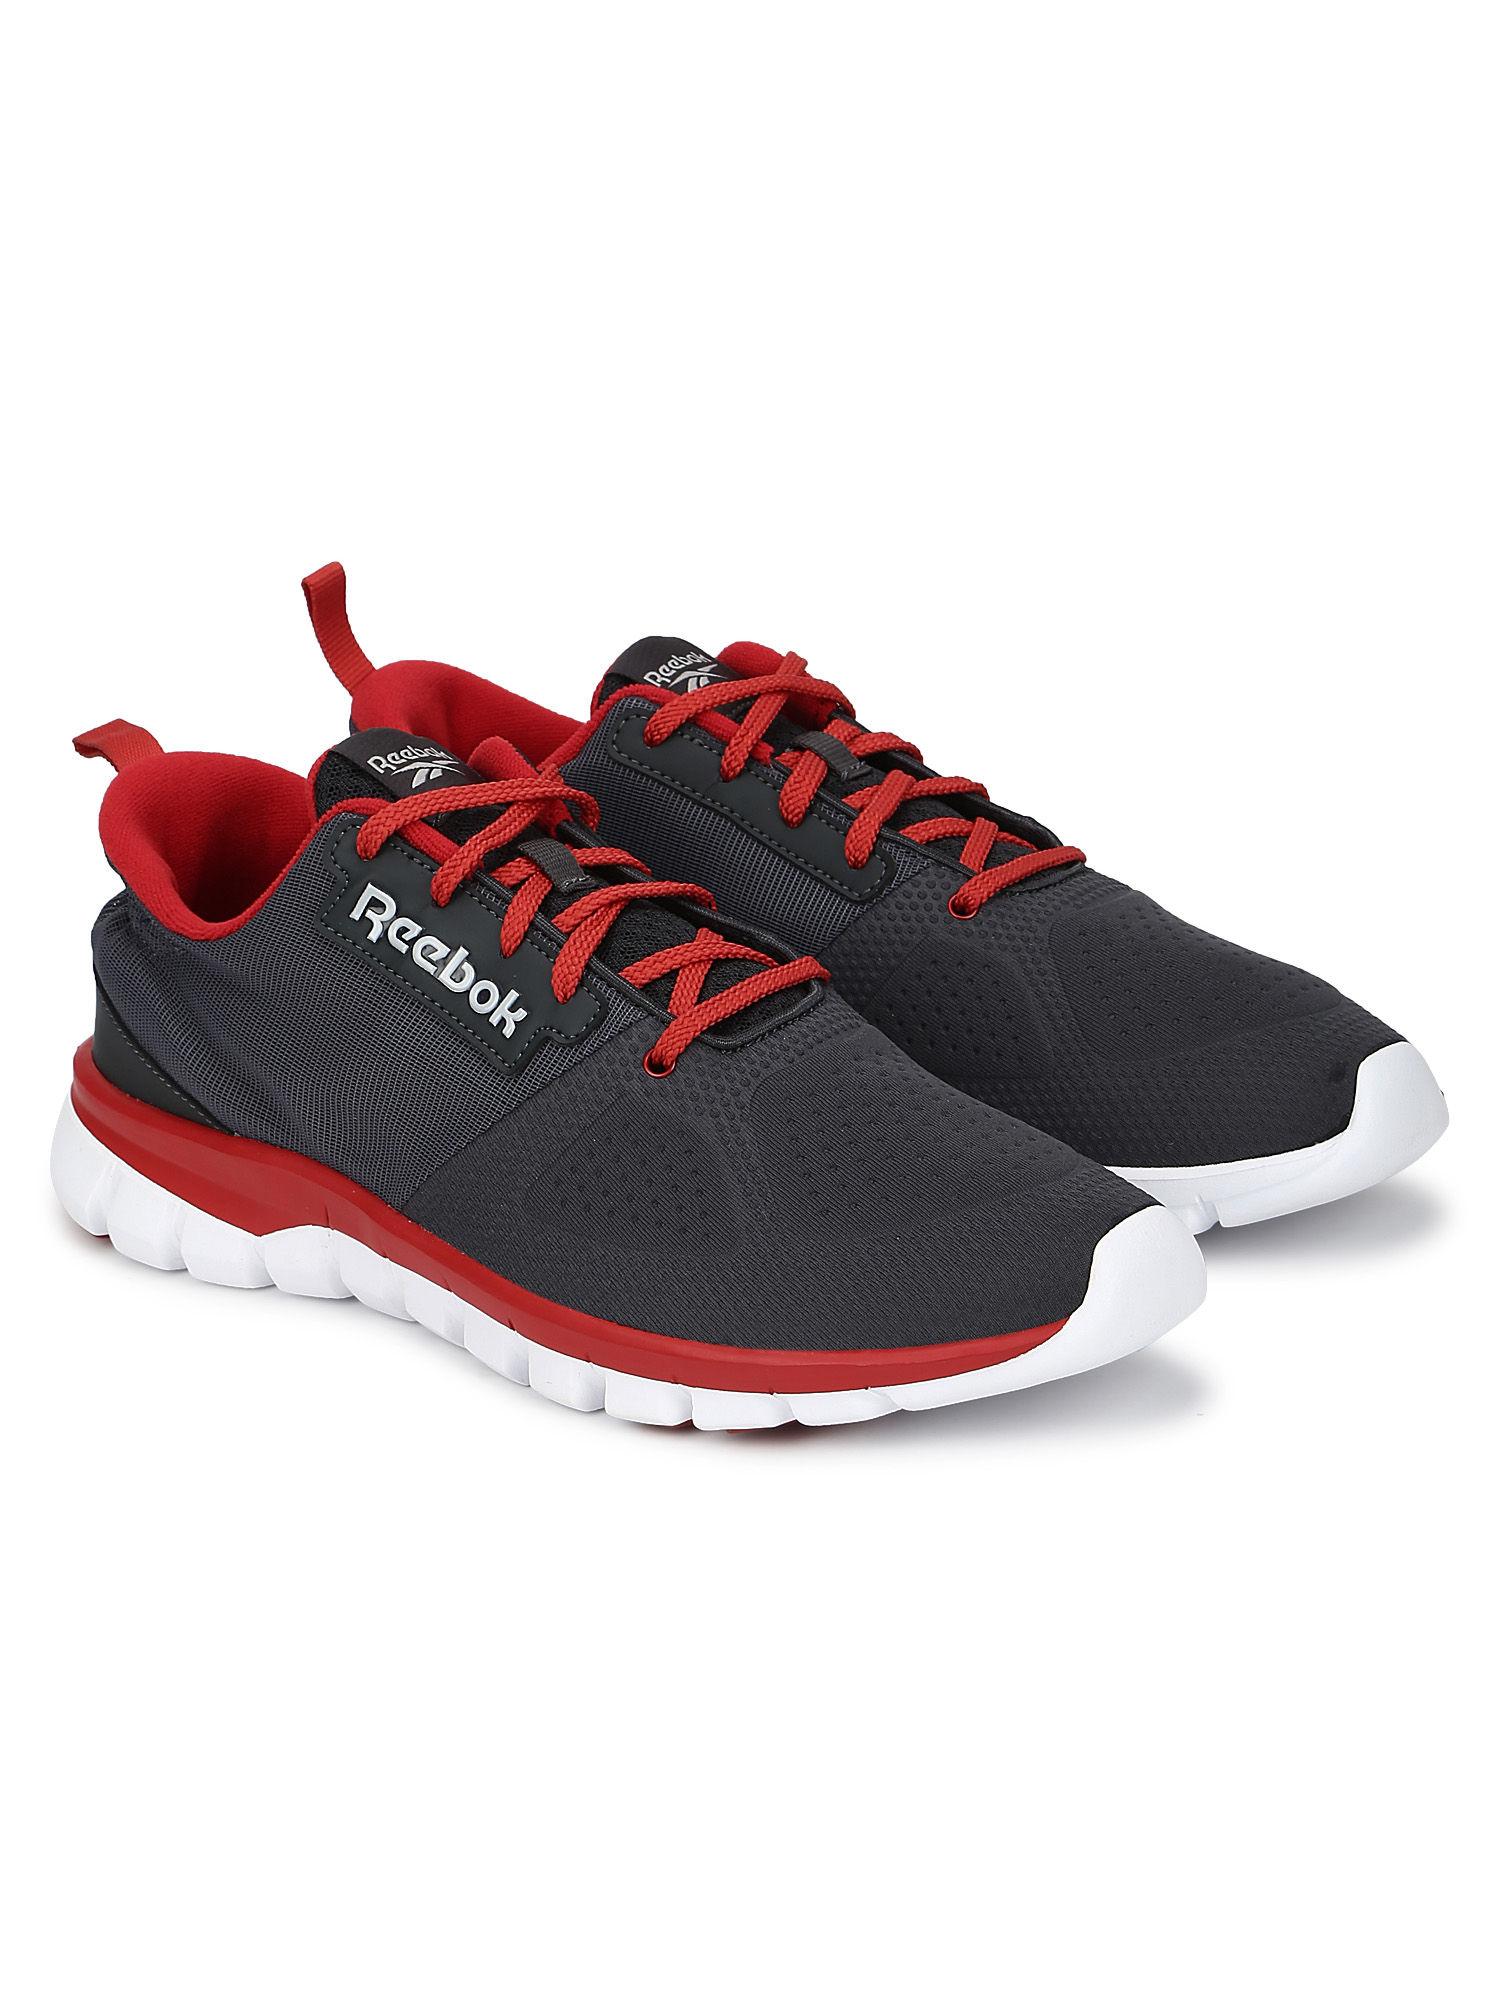 aim runner grey running shoes